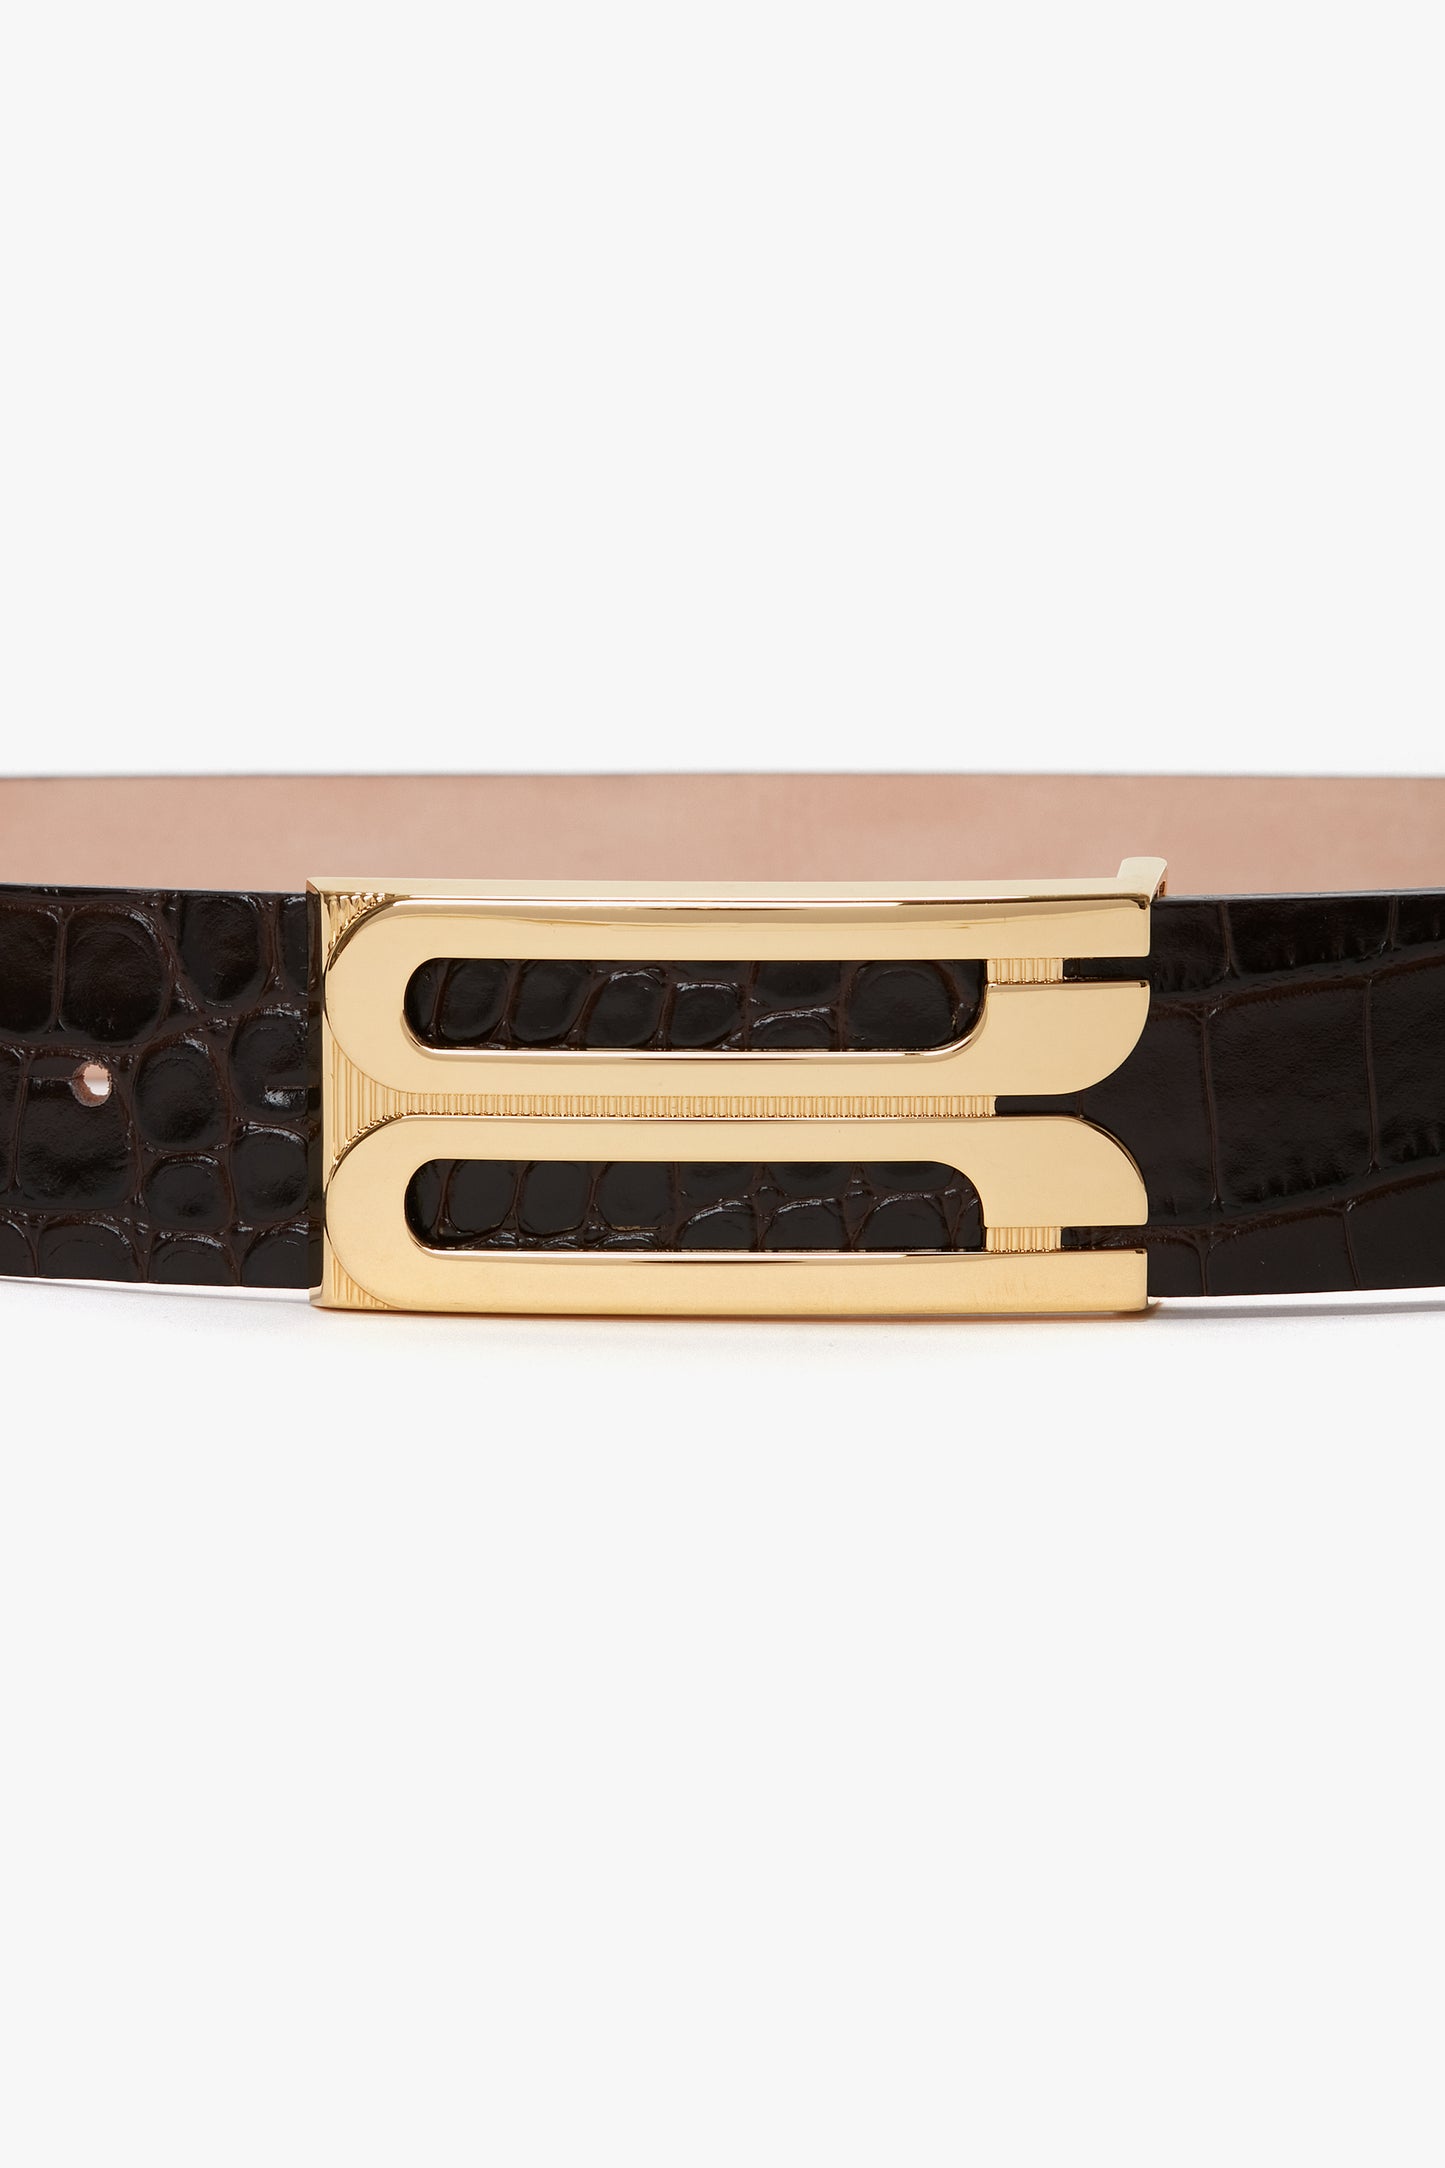 Jumbo Frame Belt In Espresso Croc Embossed Calf Leather